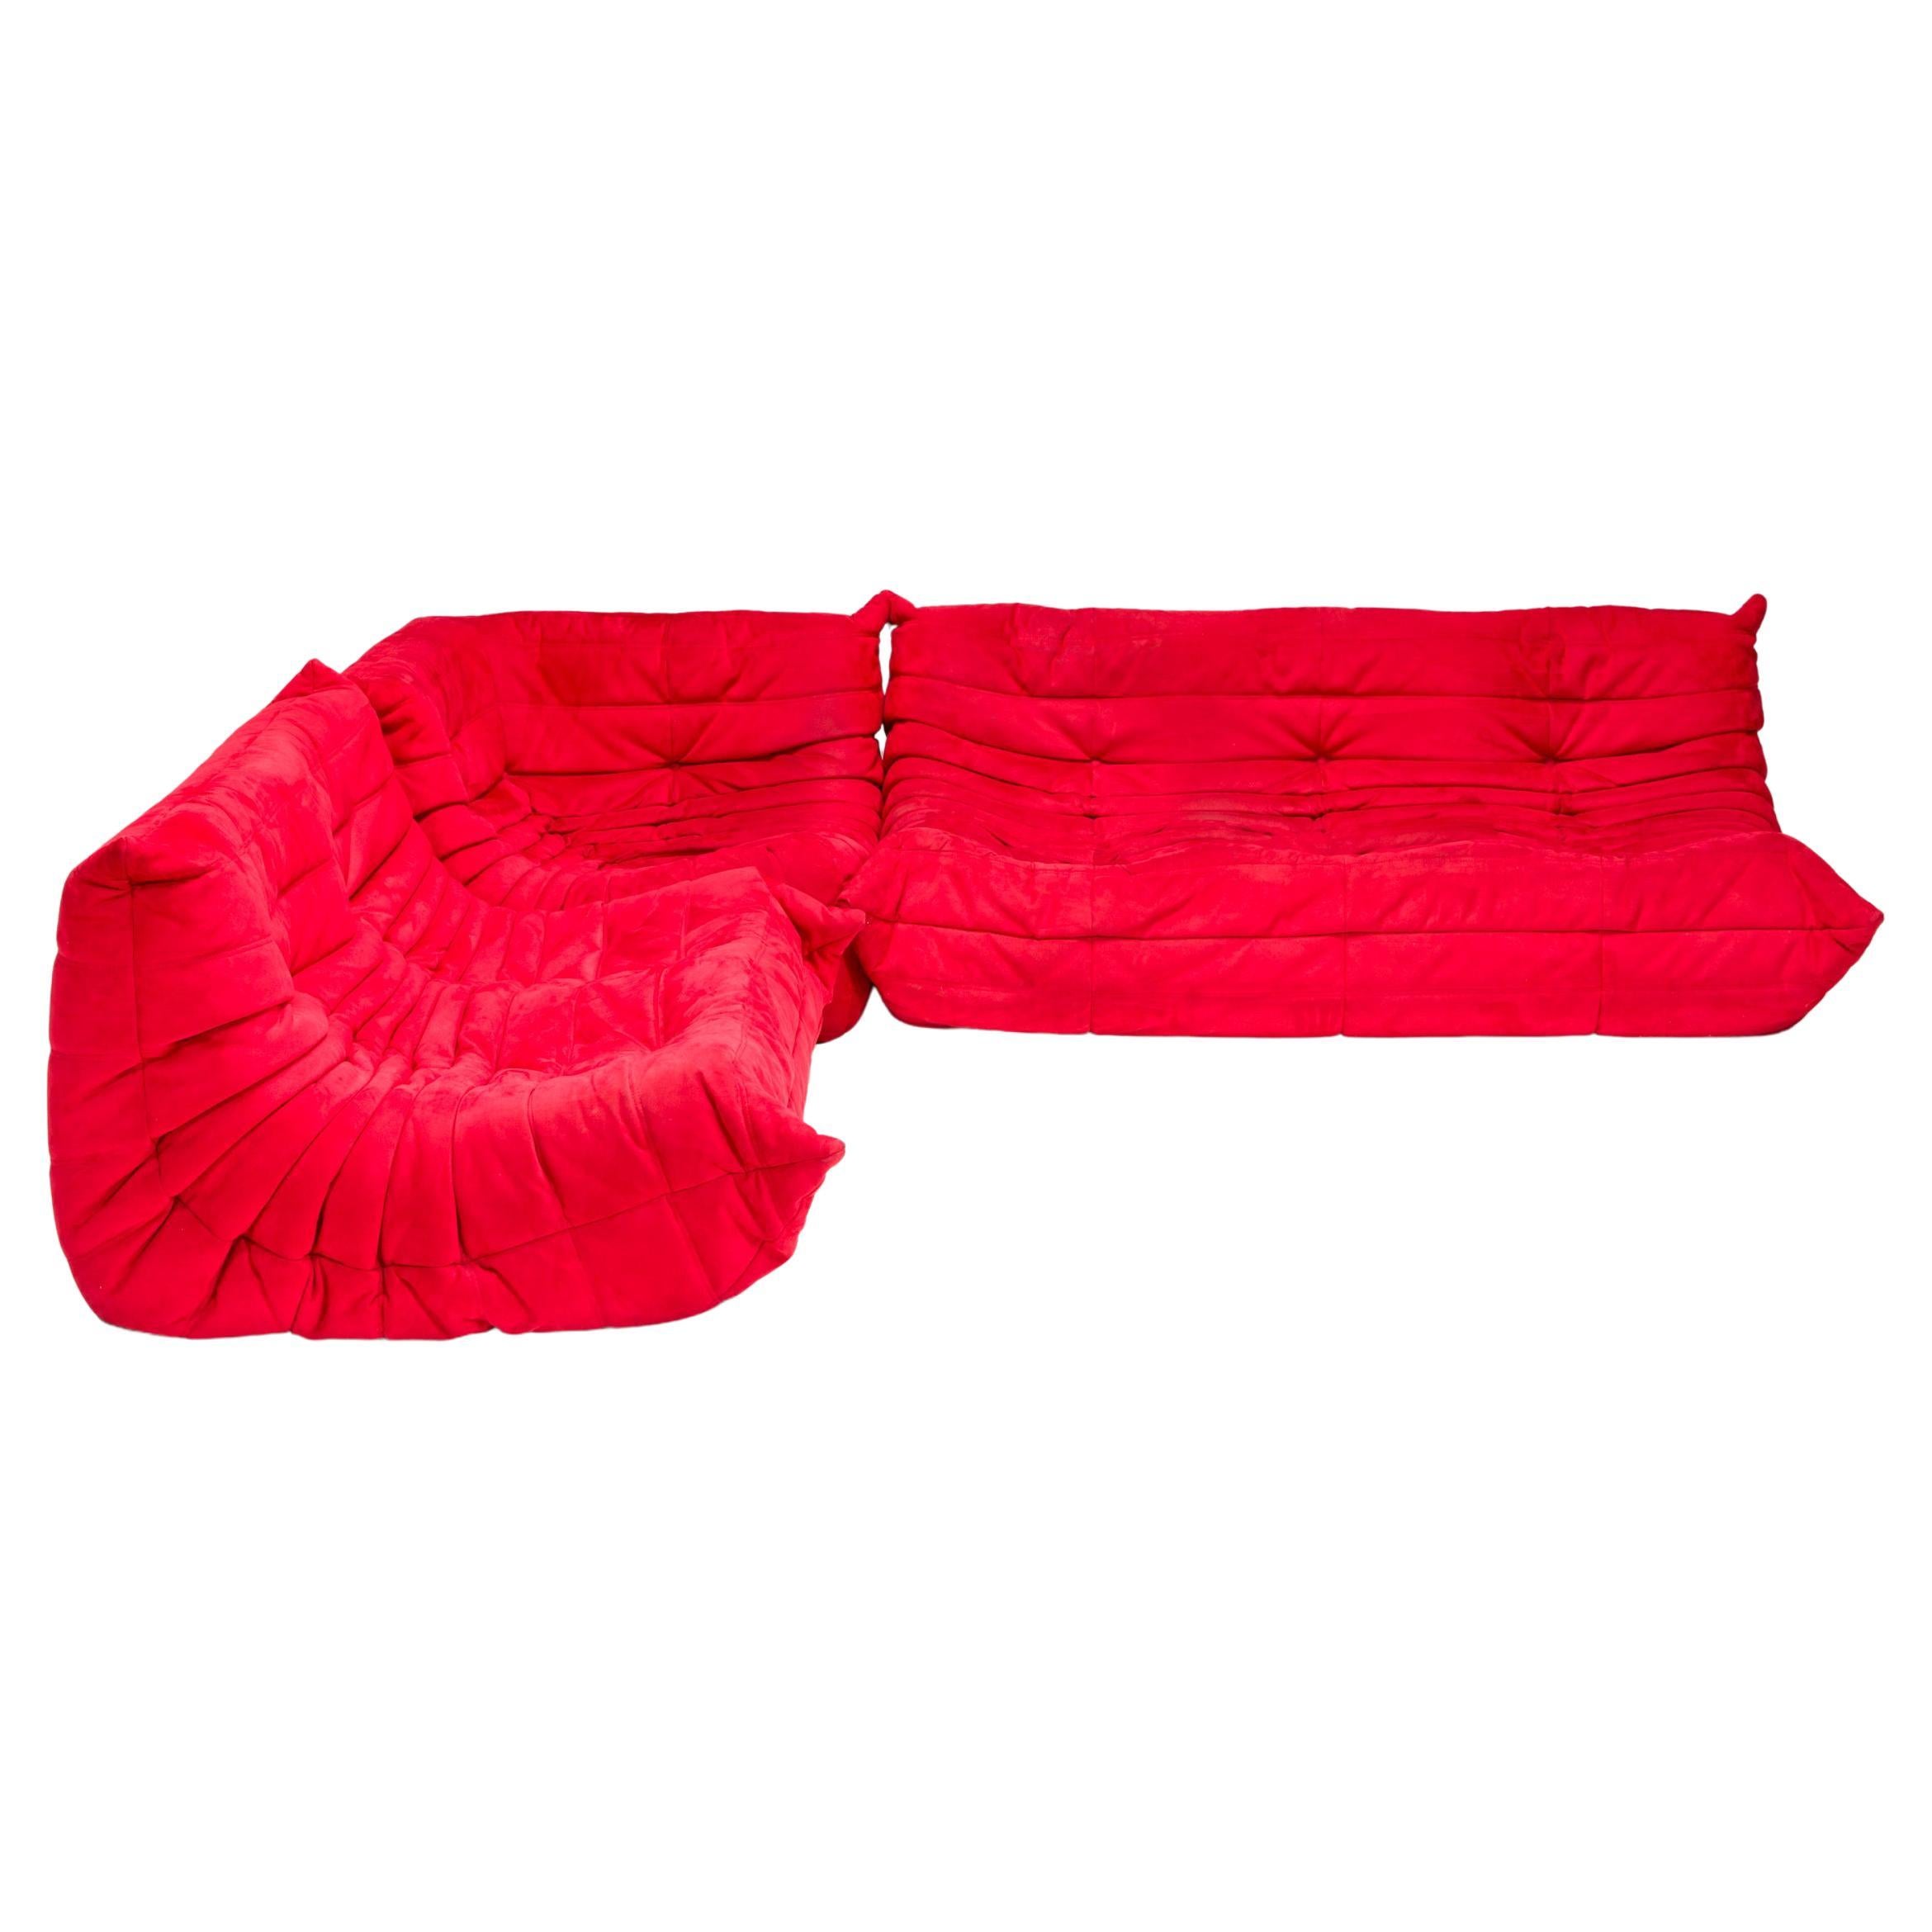 Ligne Roset by Michel Ducaroy Togo Red Alcantara Sectional Sofa, Set of 3 For Sale